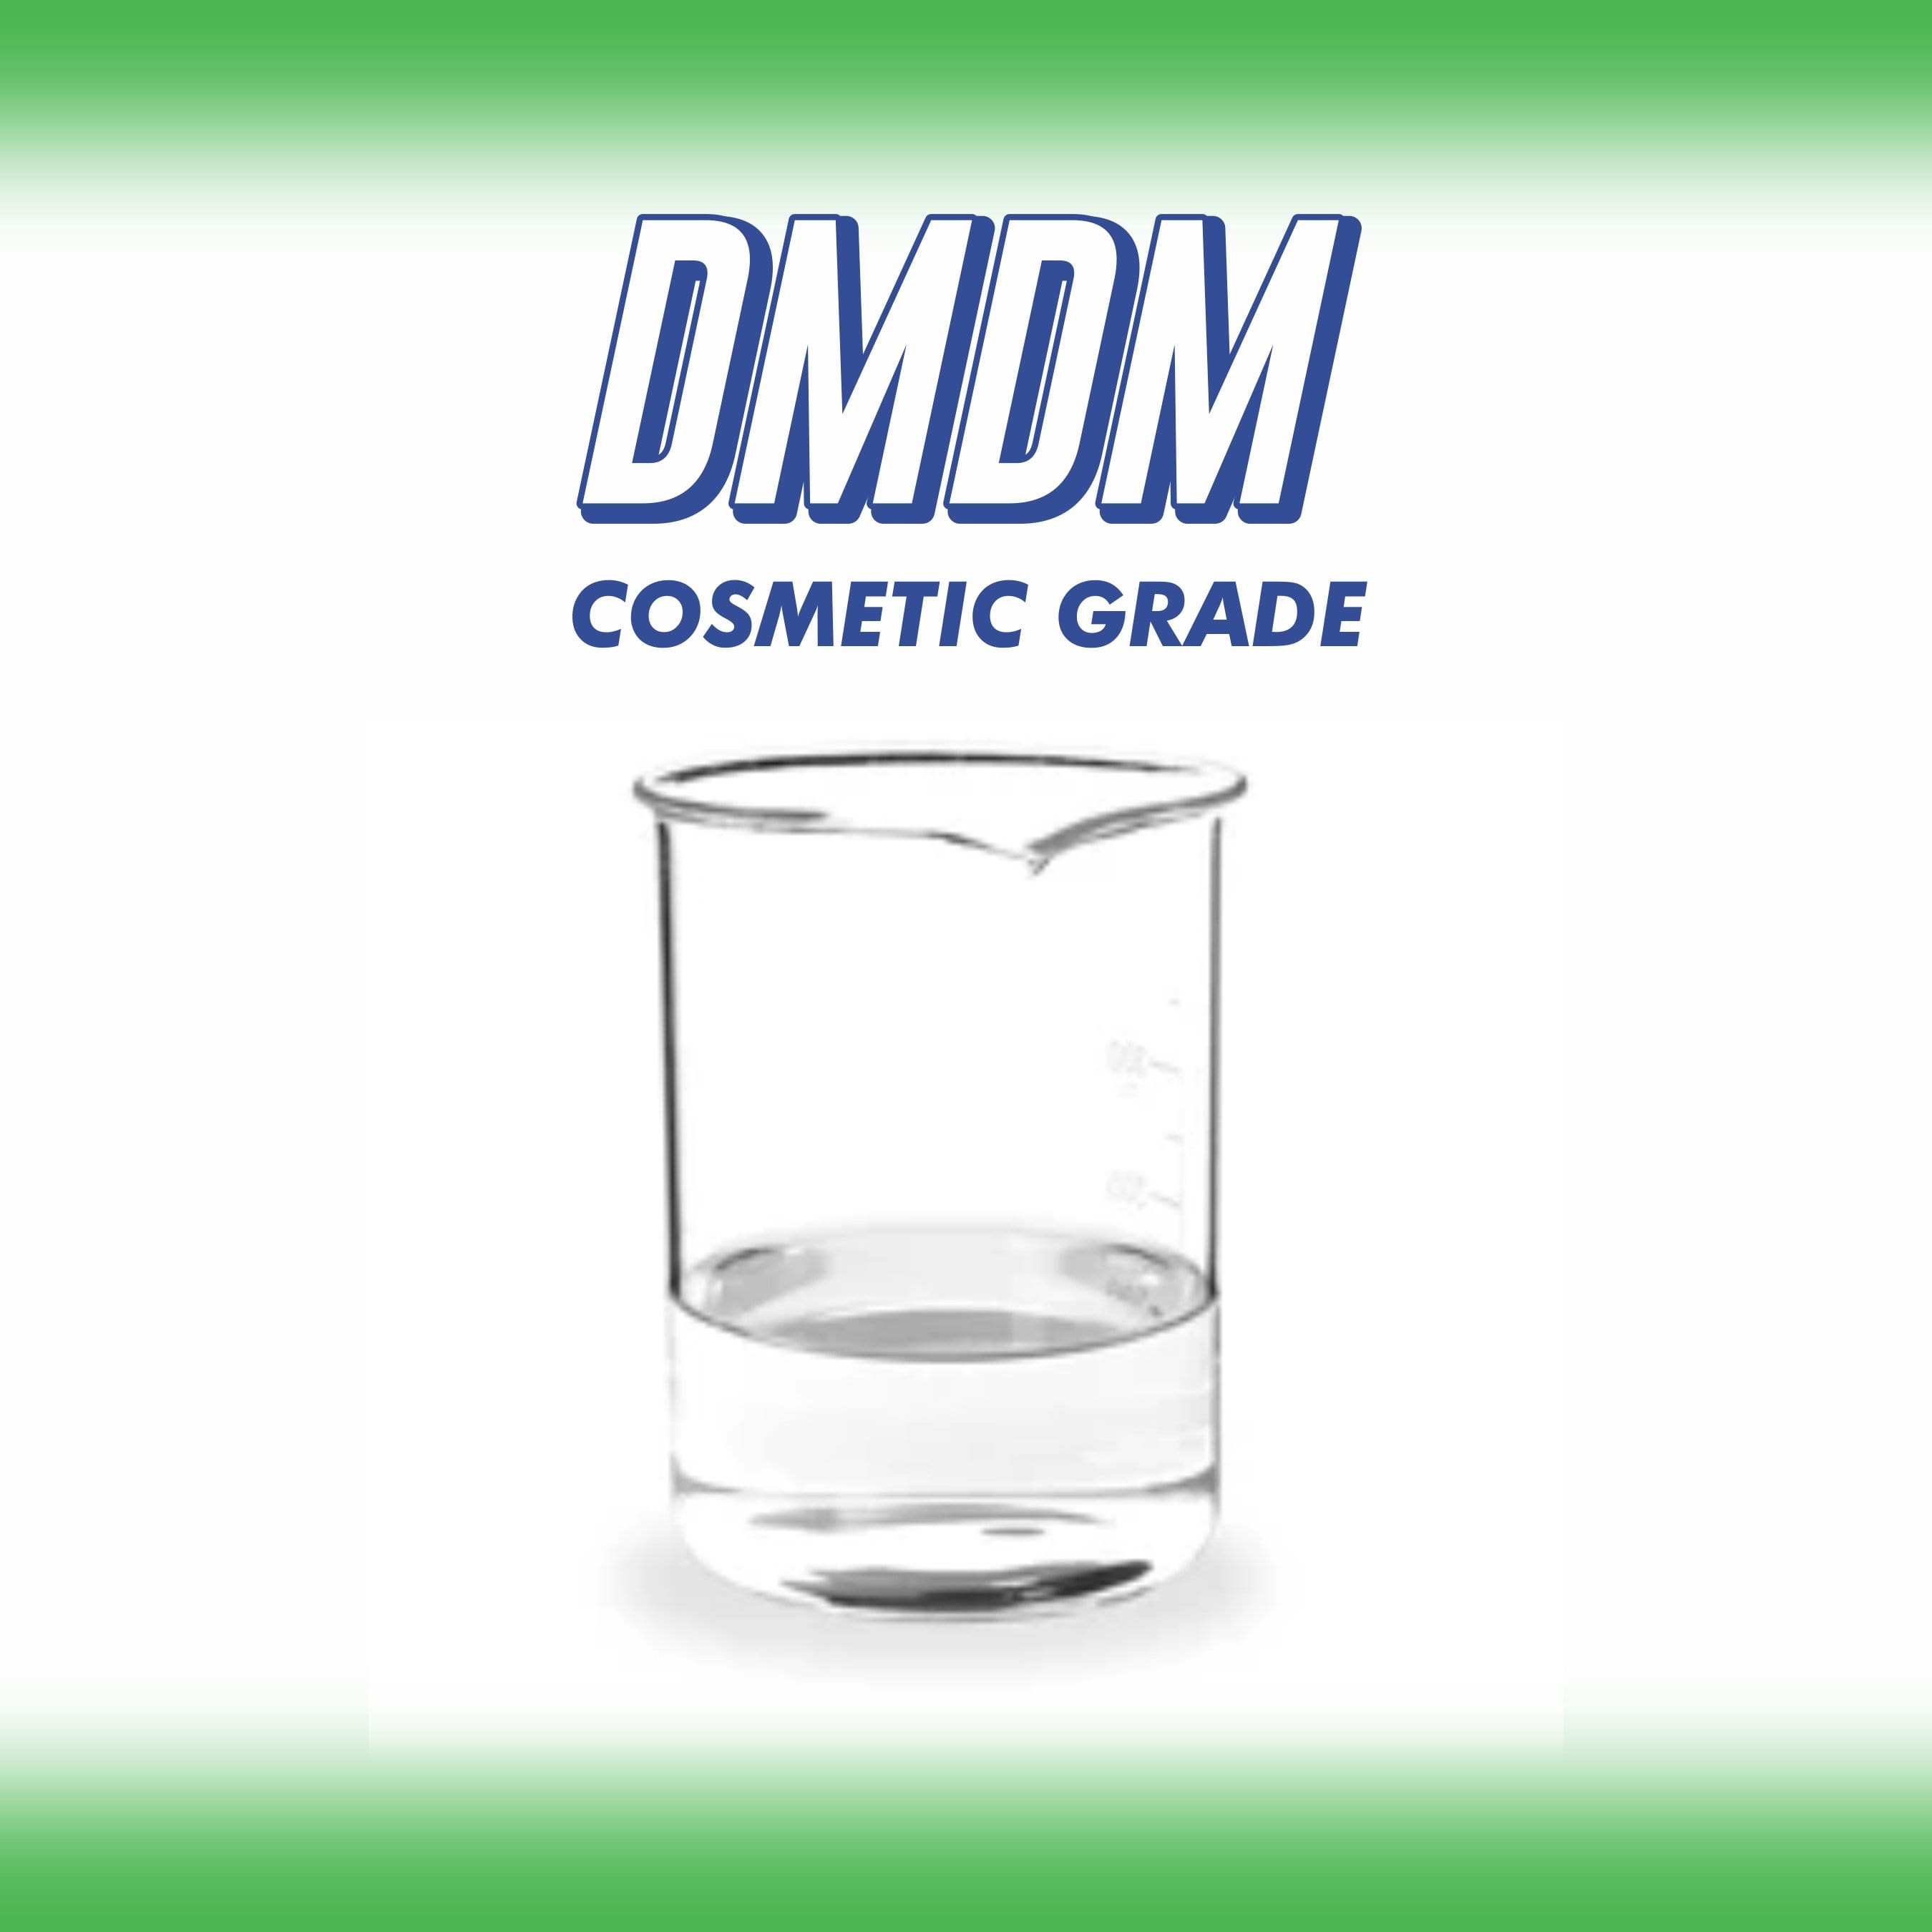 dmdm hydantoin in skin care